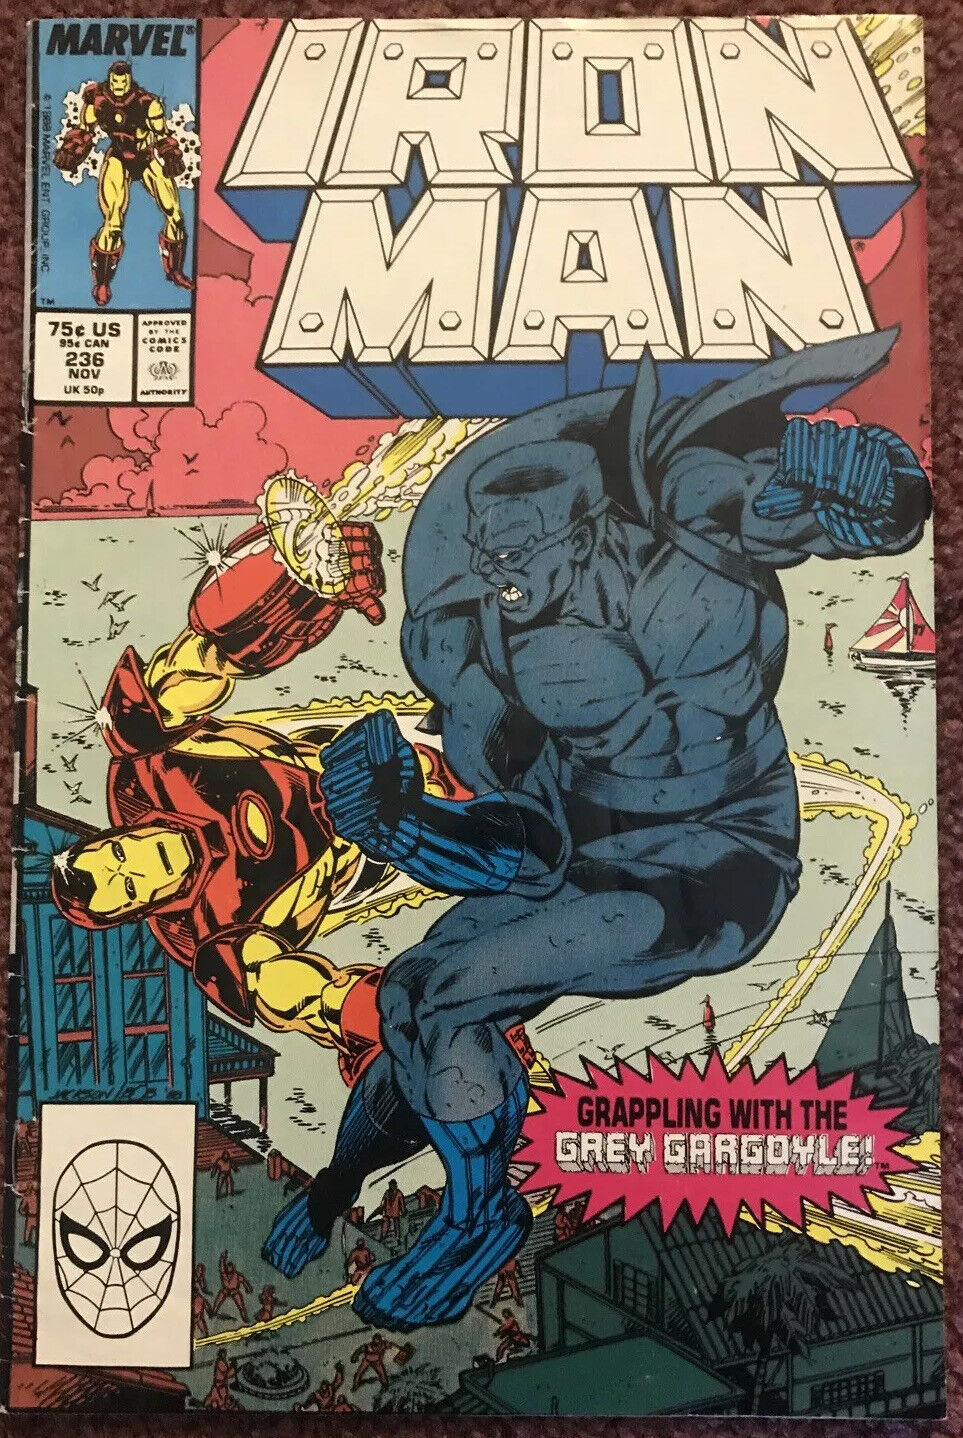 IRON MAN 236 Volume 1 Marvel Comics Group 1991 Stone Cold Grey Gargoyle app. - aliencomics.ca